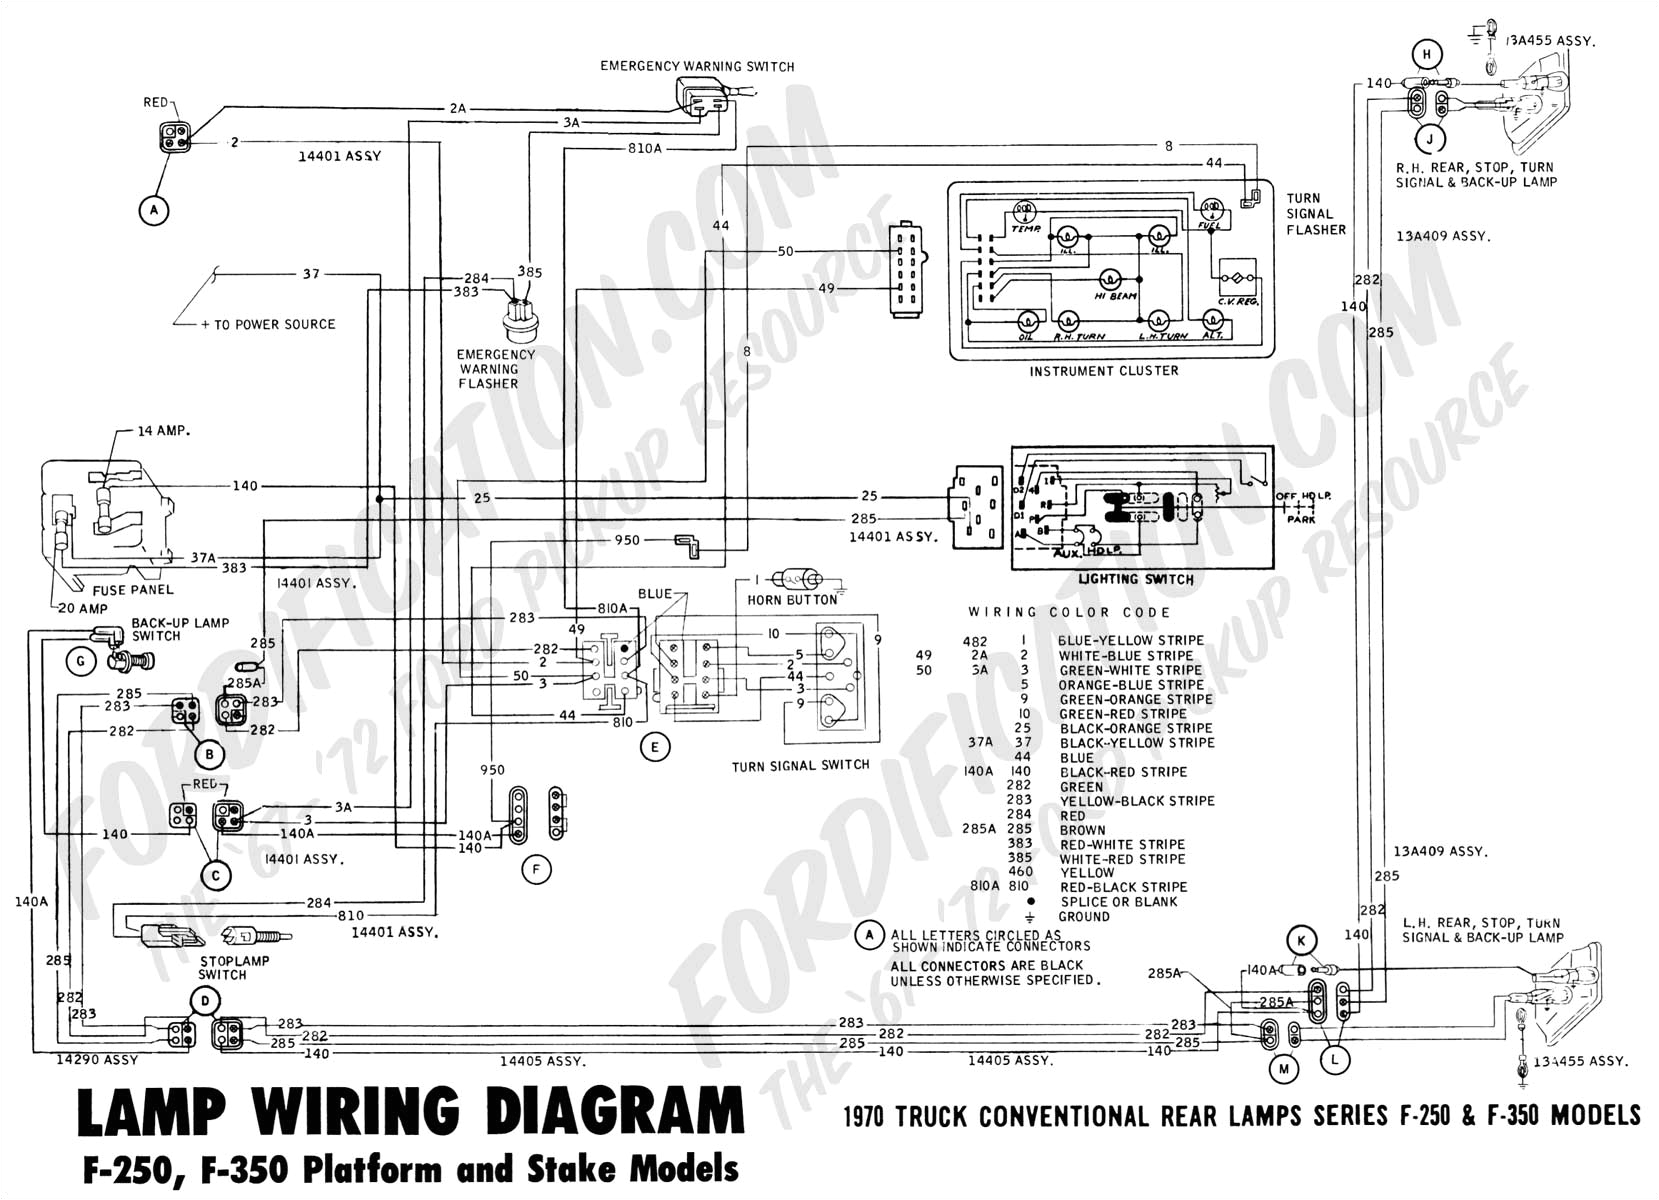 wiring diagram 70f250350 rearlamps01 jpg